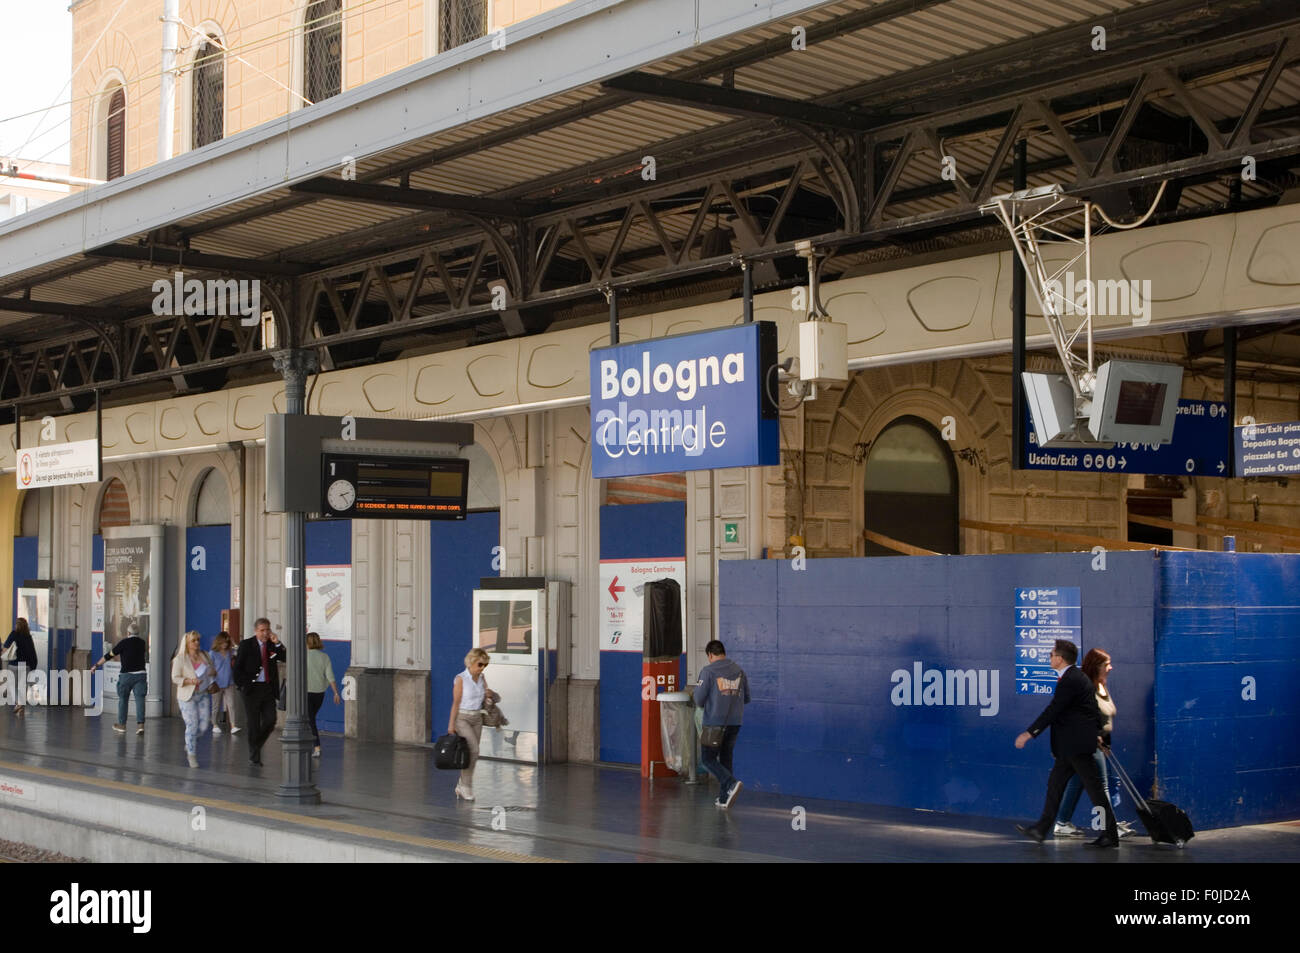 bologna station central centrale train stations italy italian station platform Stock Photo